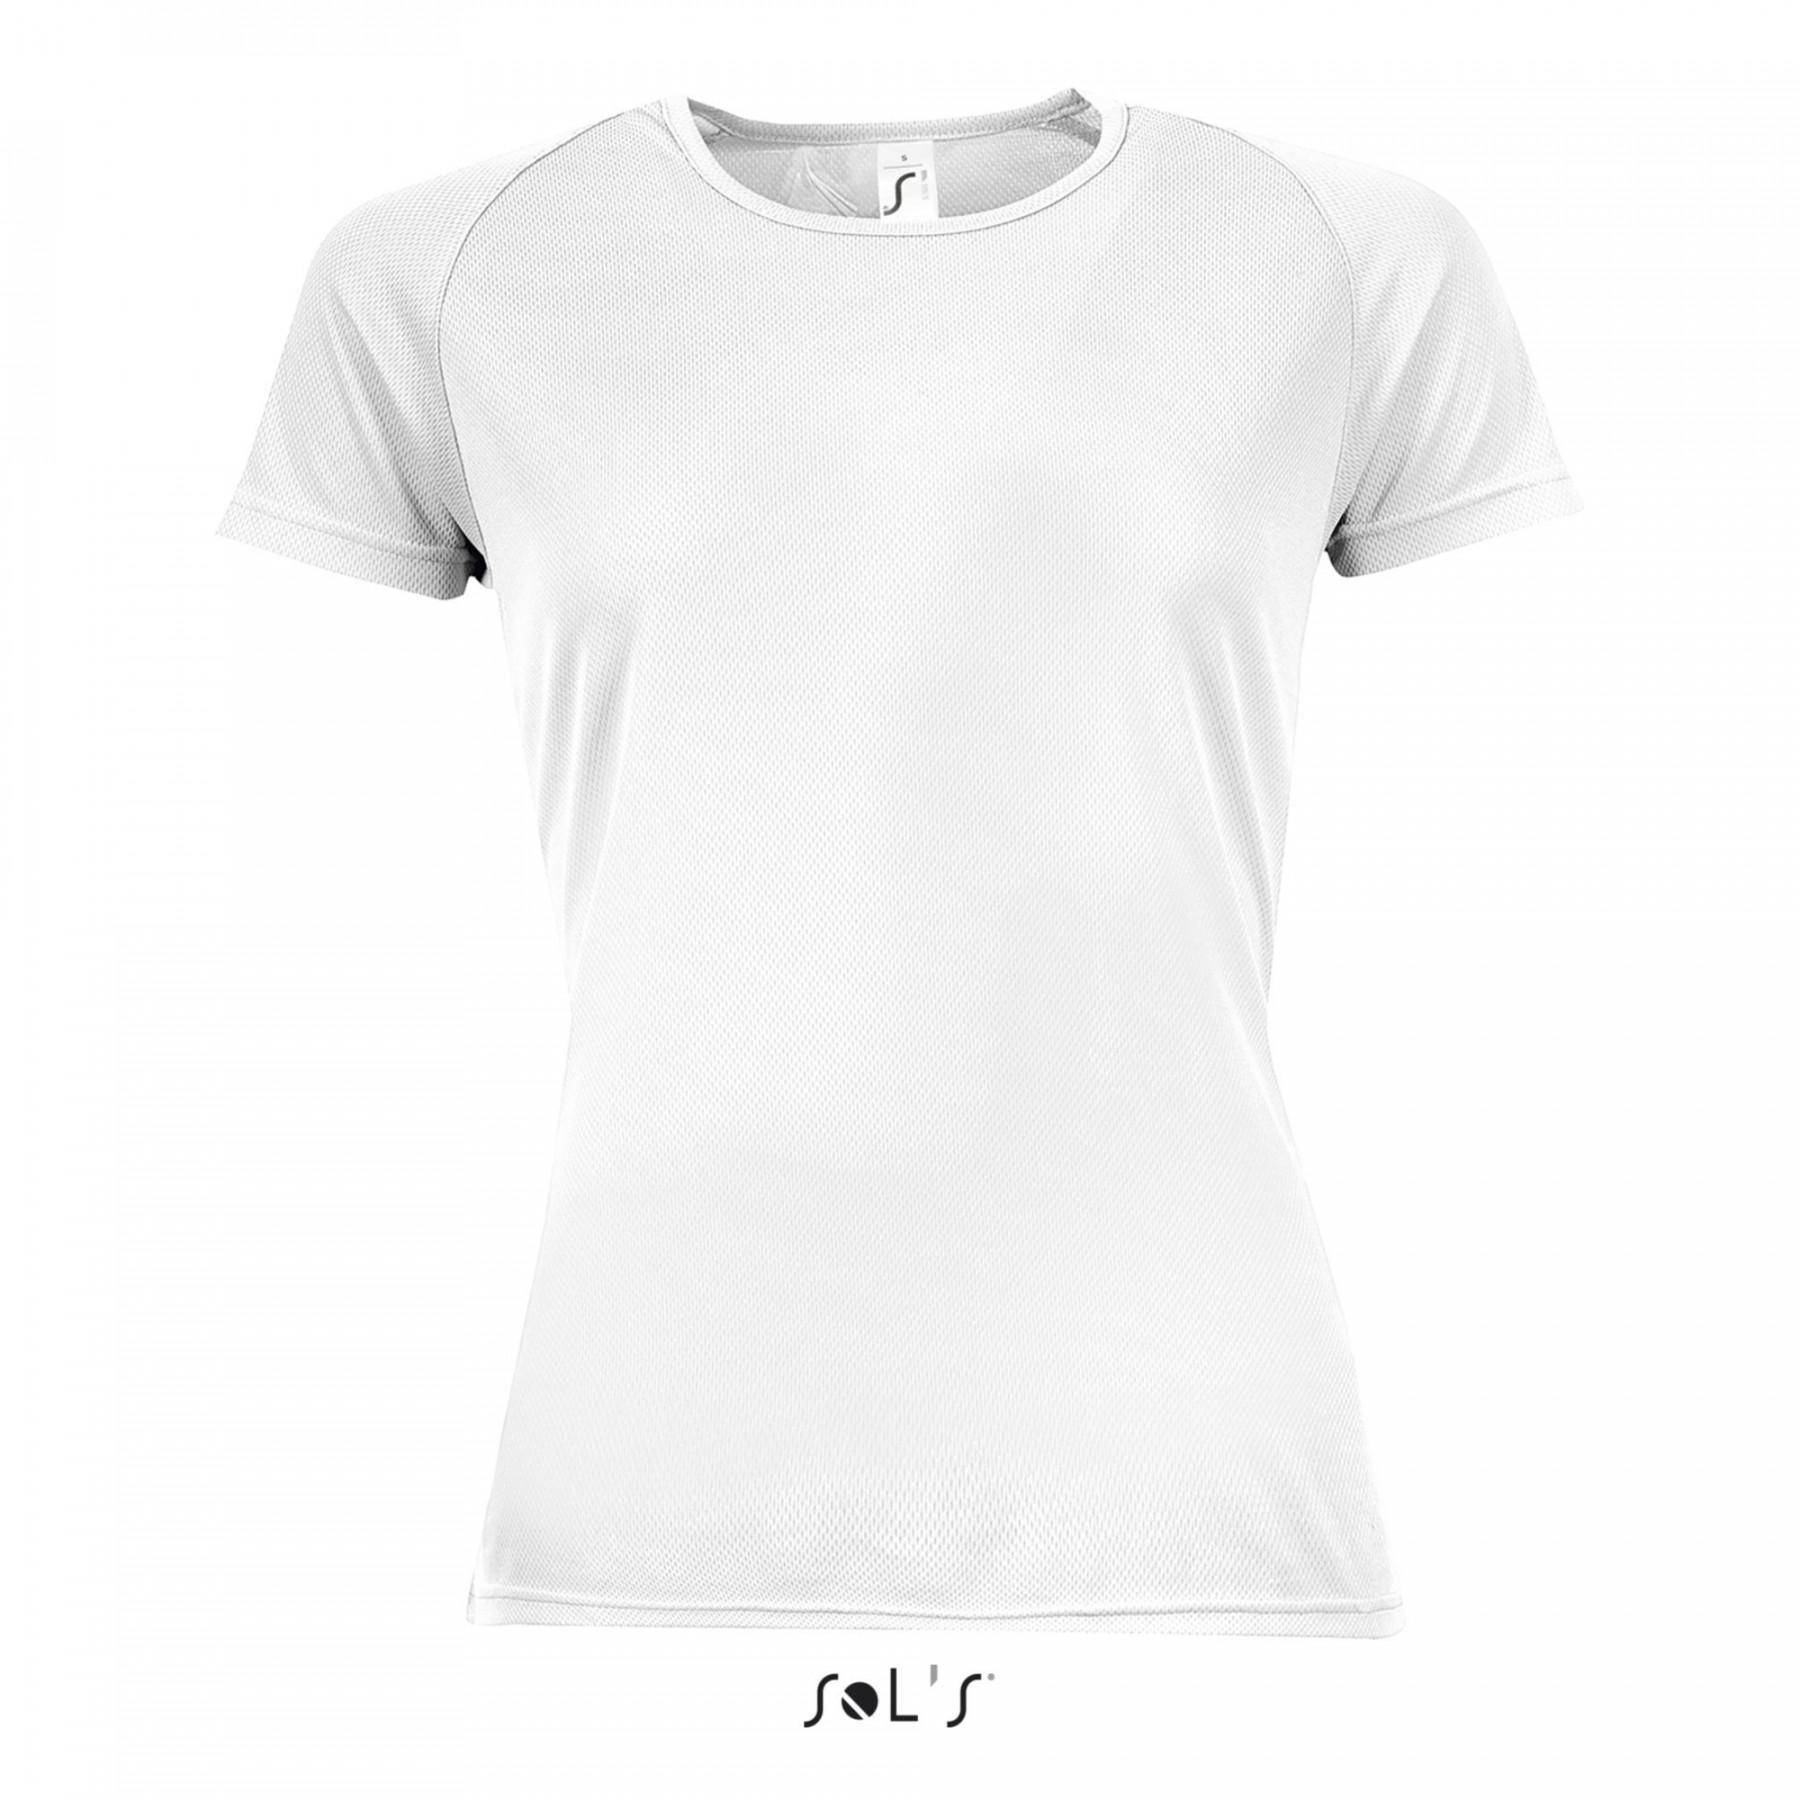 T-shirt femme Sol's Sporty